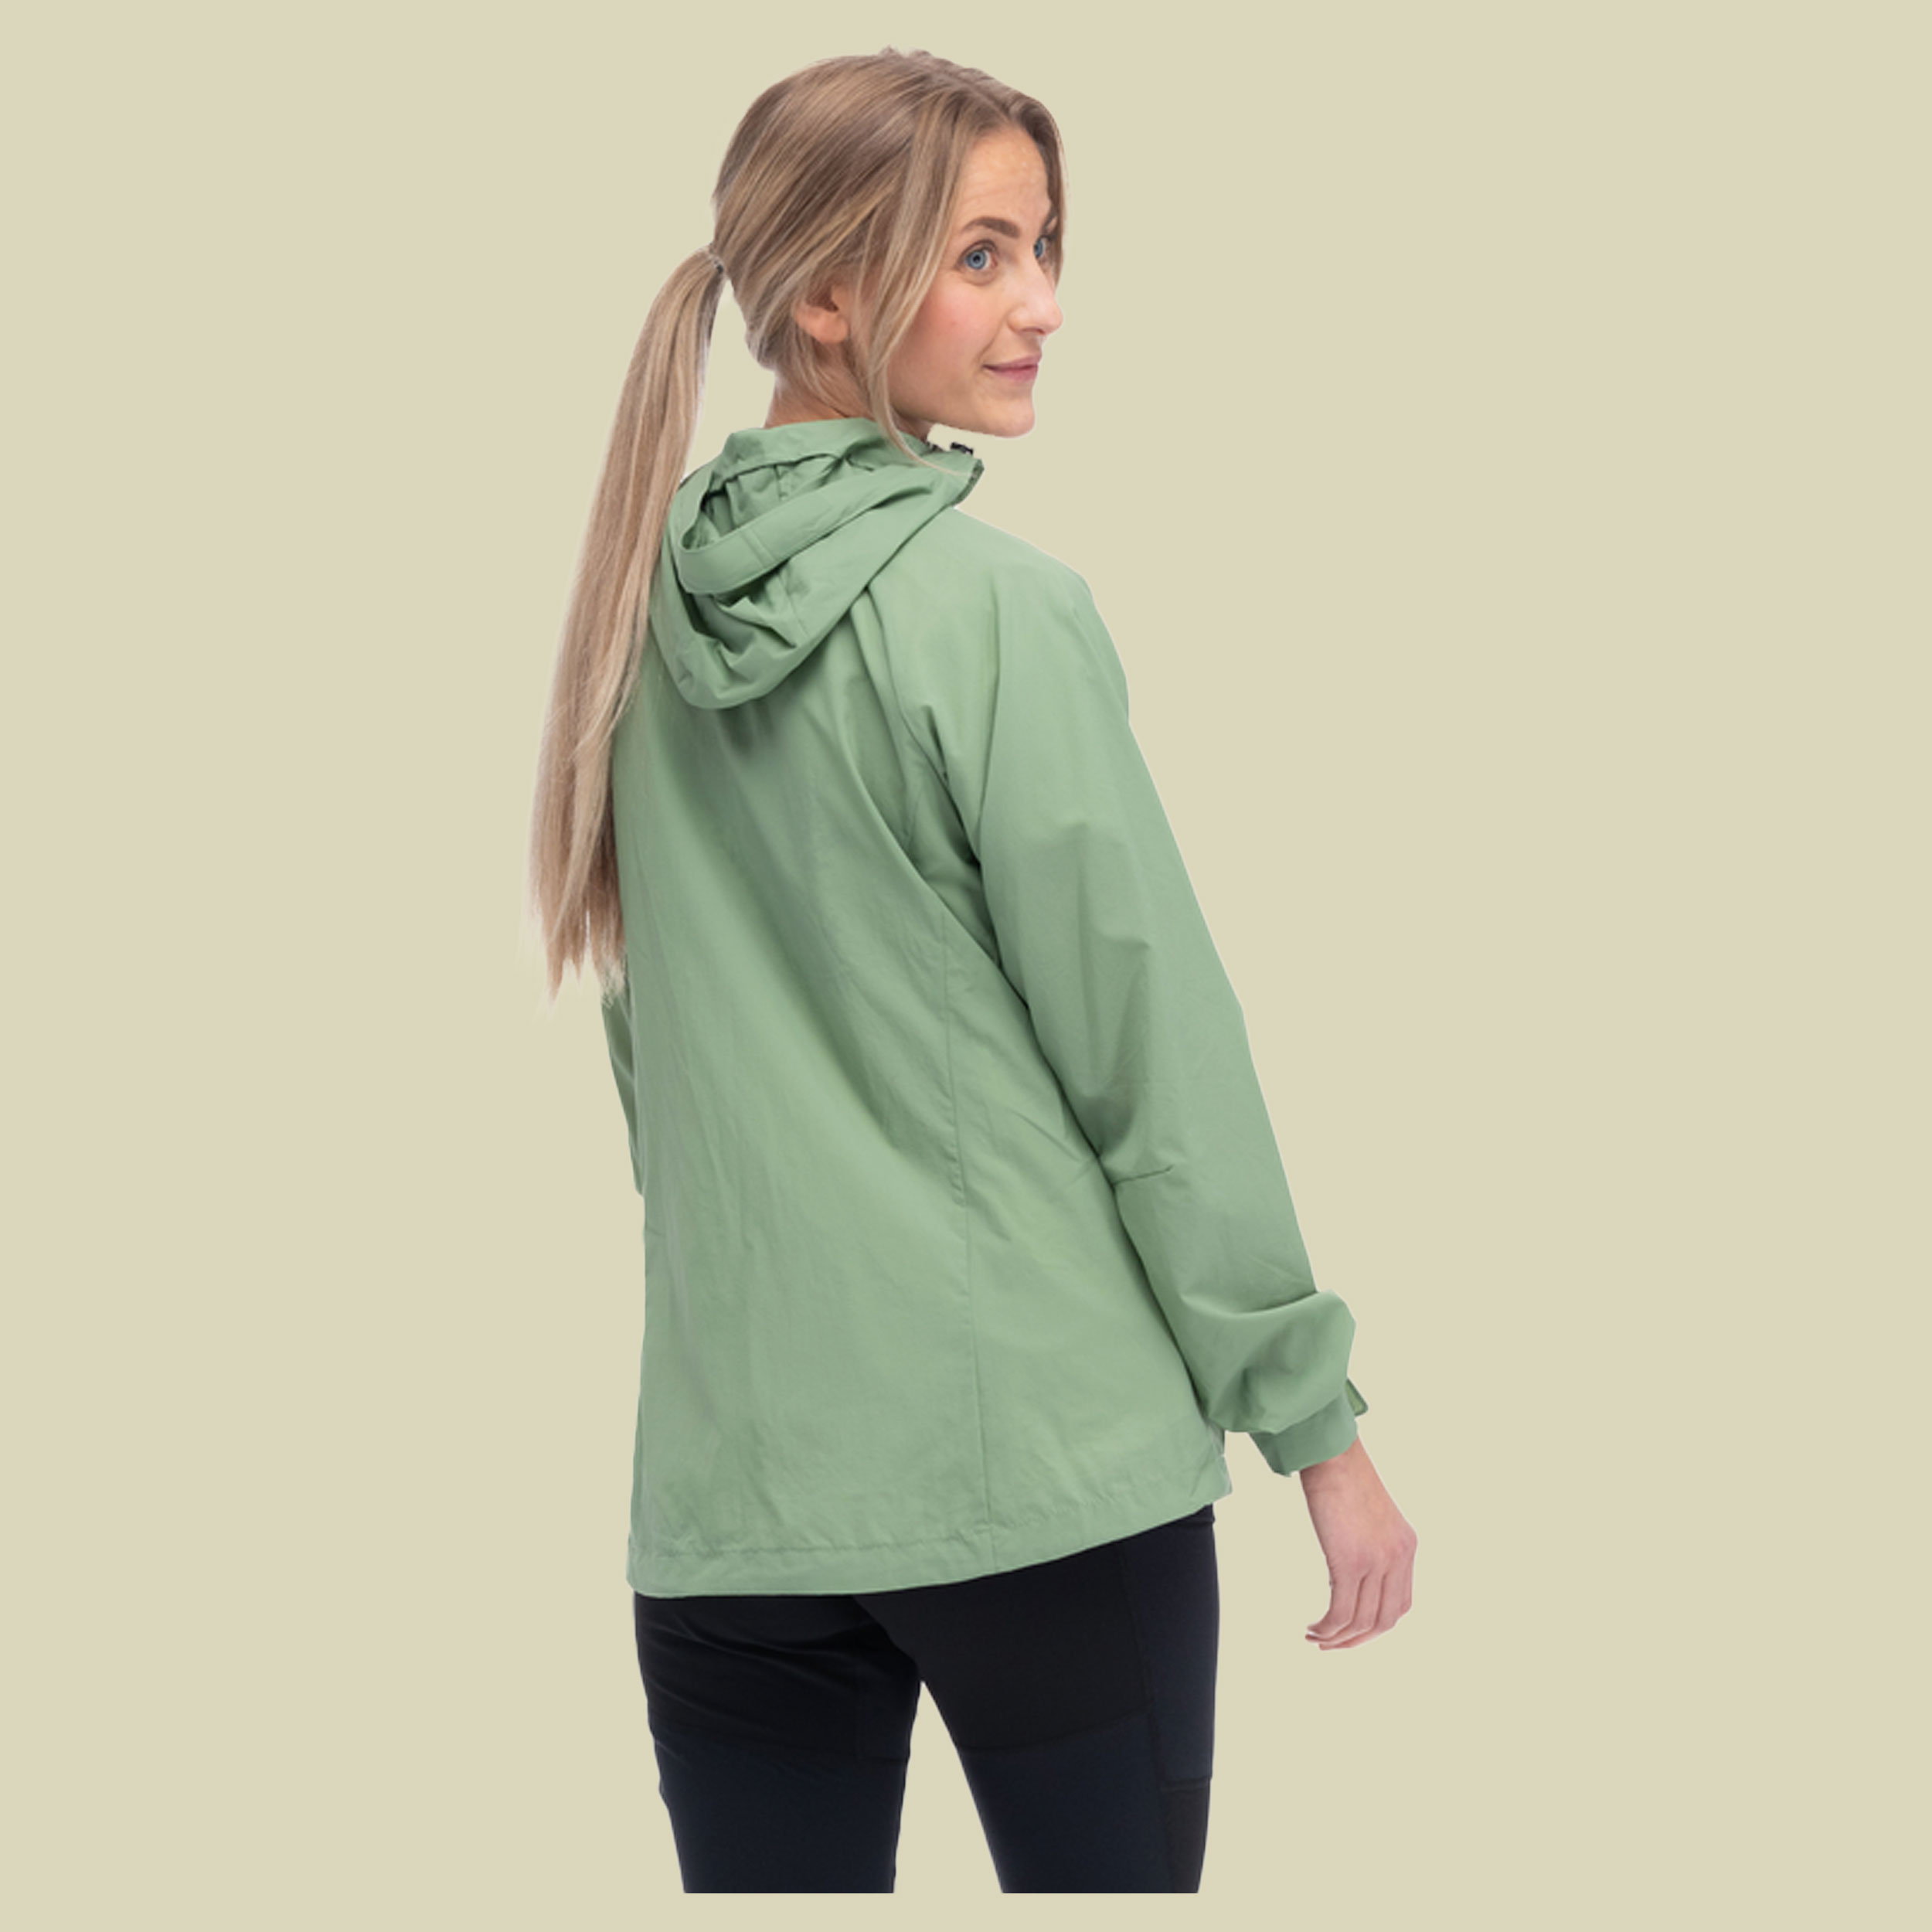 Skar Light Windbreaker Jacket Women Größe M  Farbe jade green